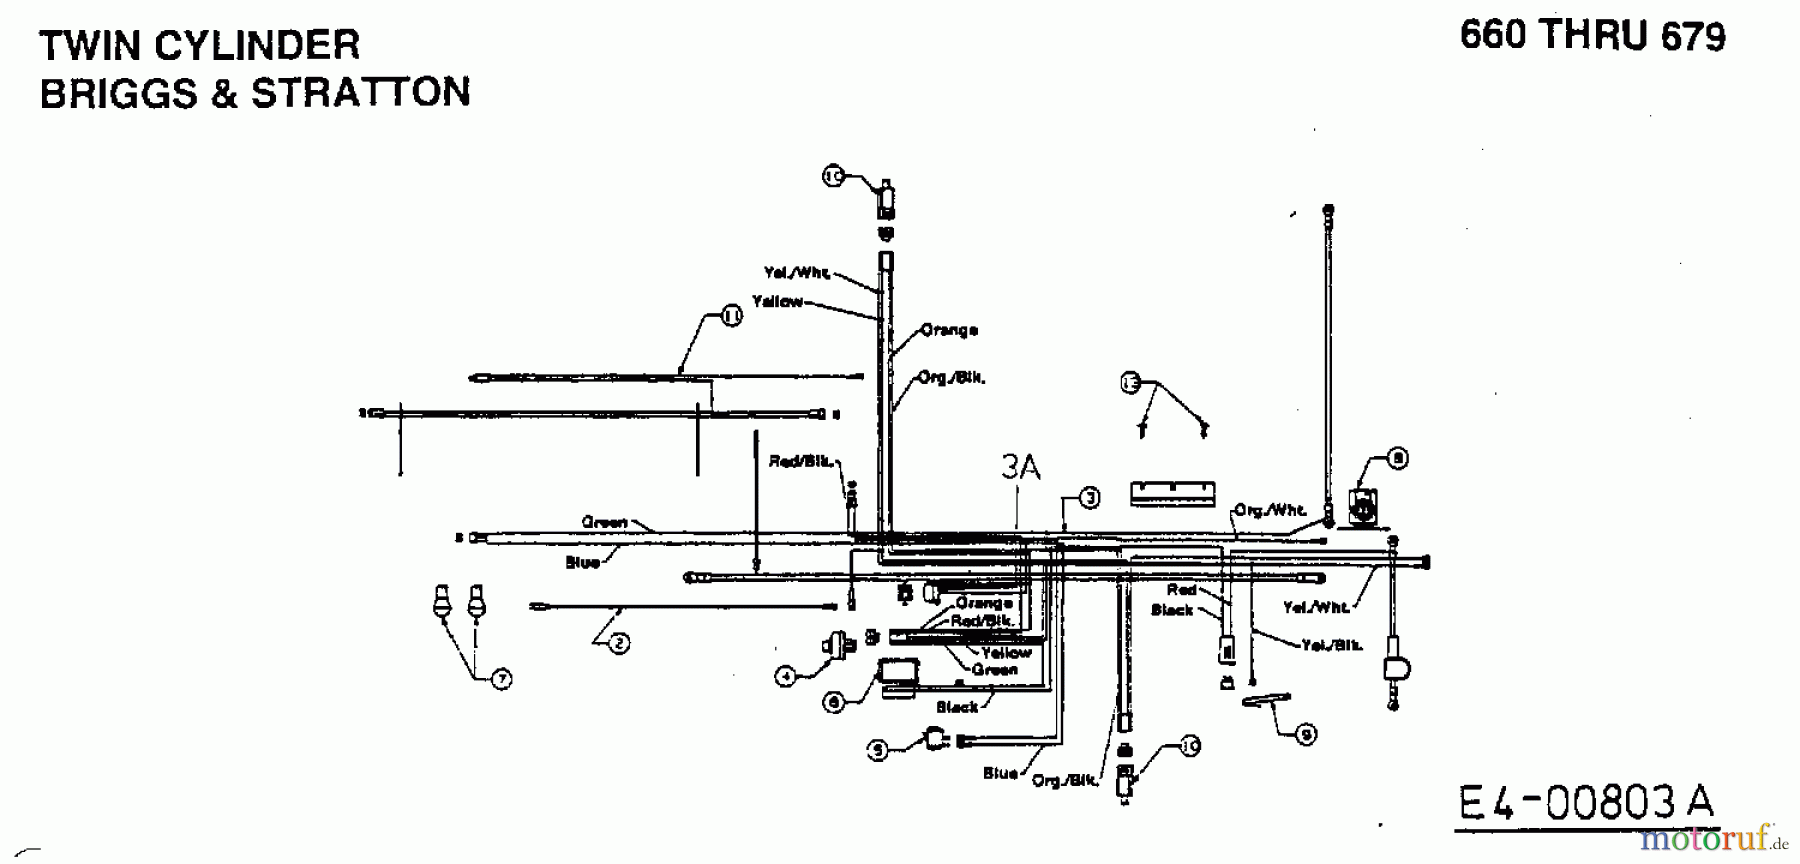  MTD Lawn tractors H 160 13AF695G678  (1998) Wiring diagram twin cylinder